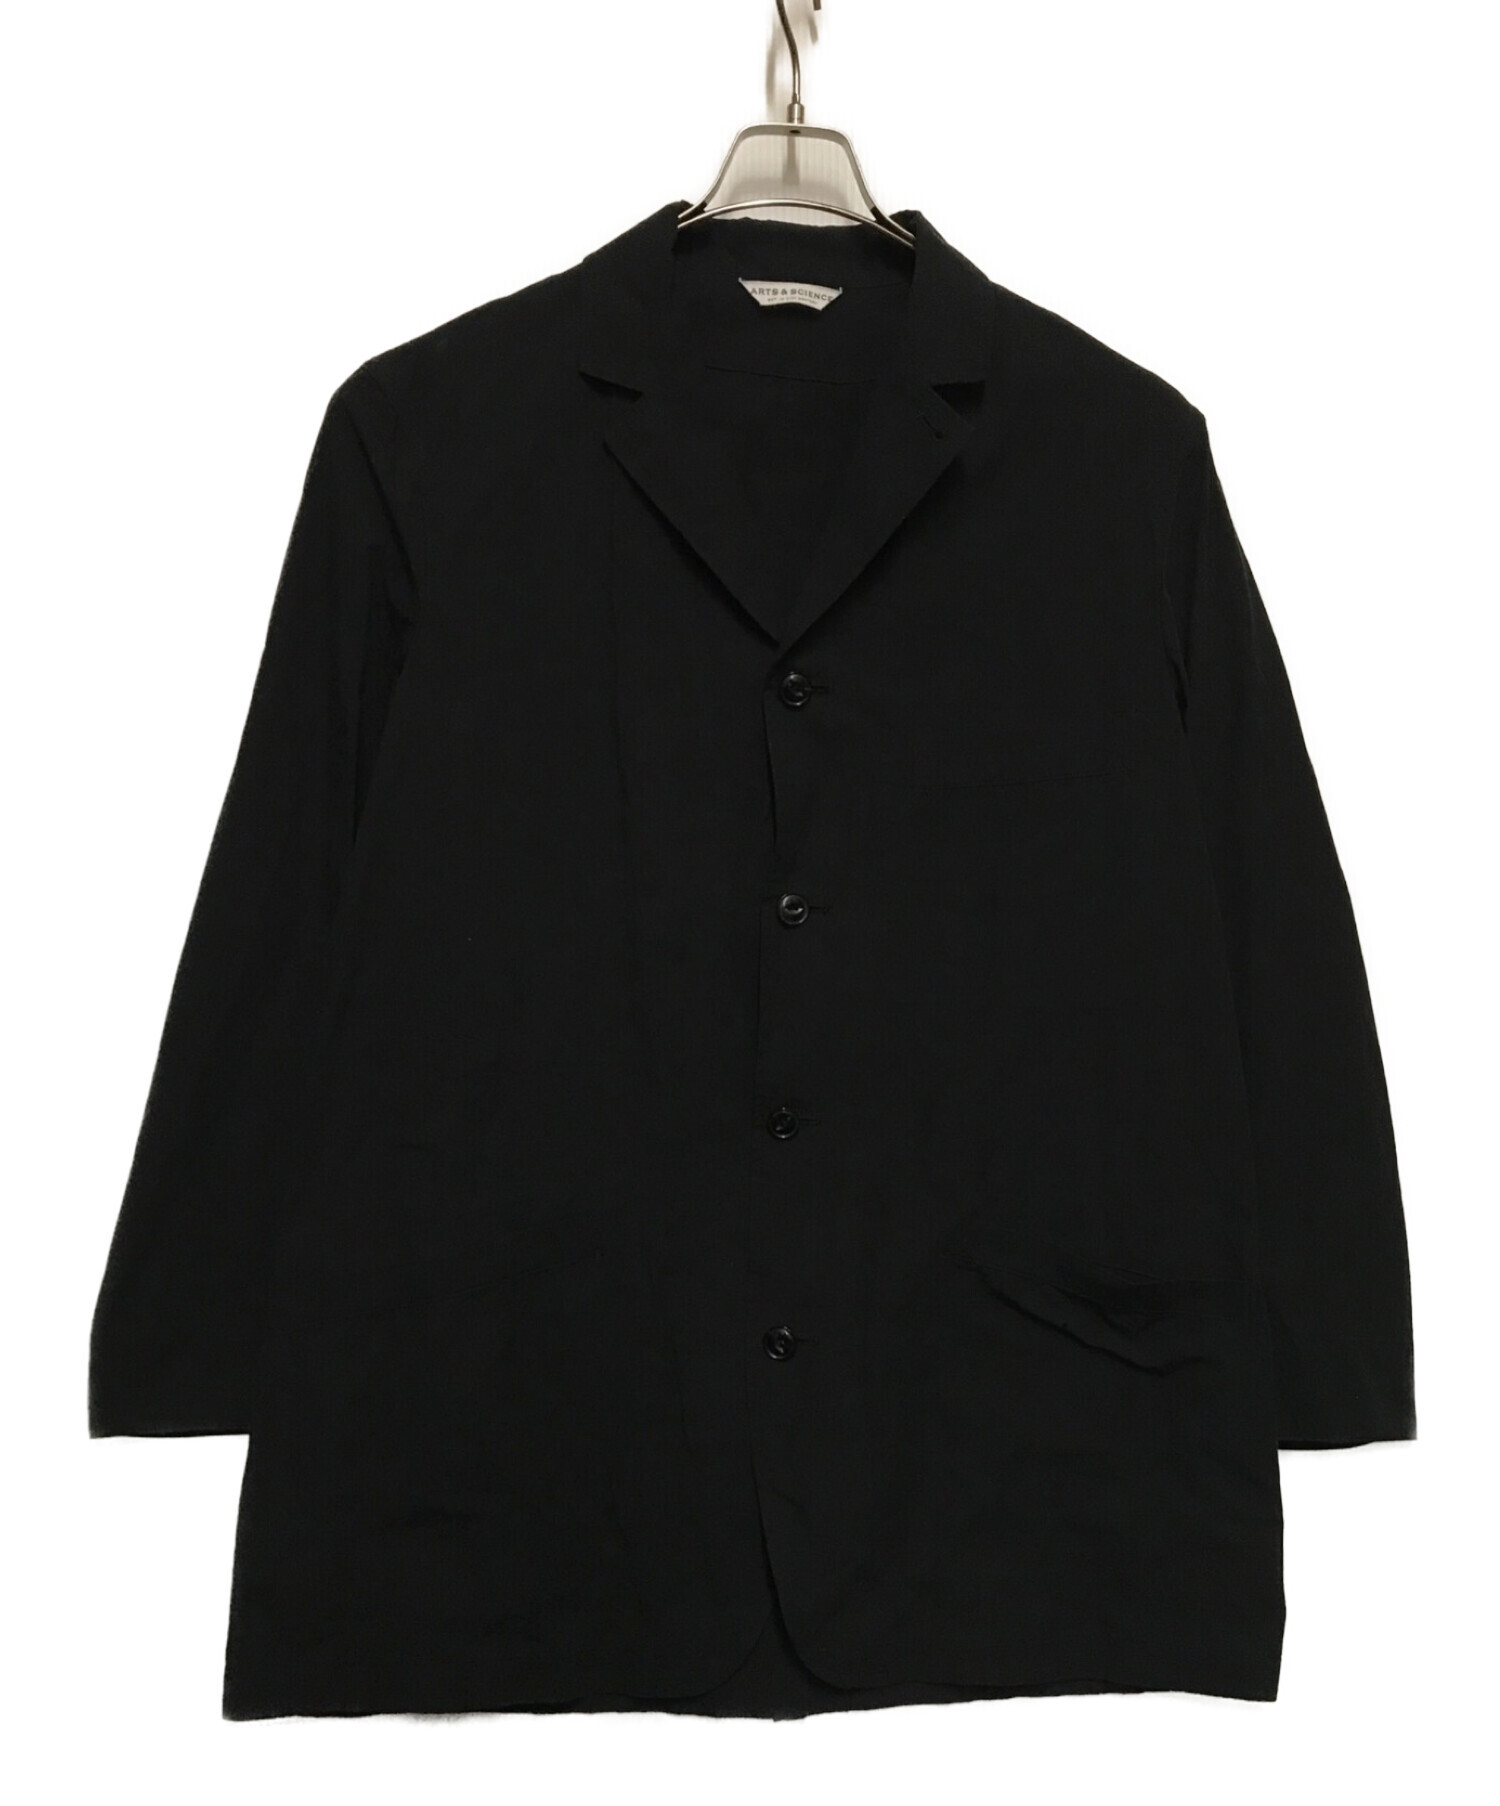 ARTS&SCIENCE (アーツアンドサイエンス) Perfumer's jacket ブラック サイズ:3